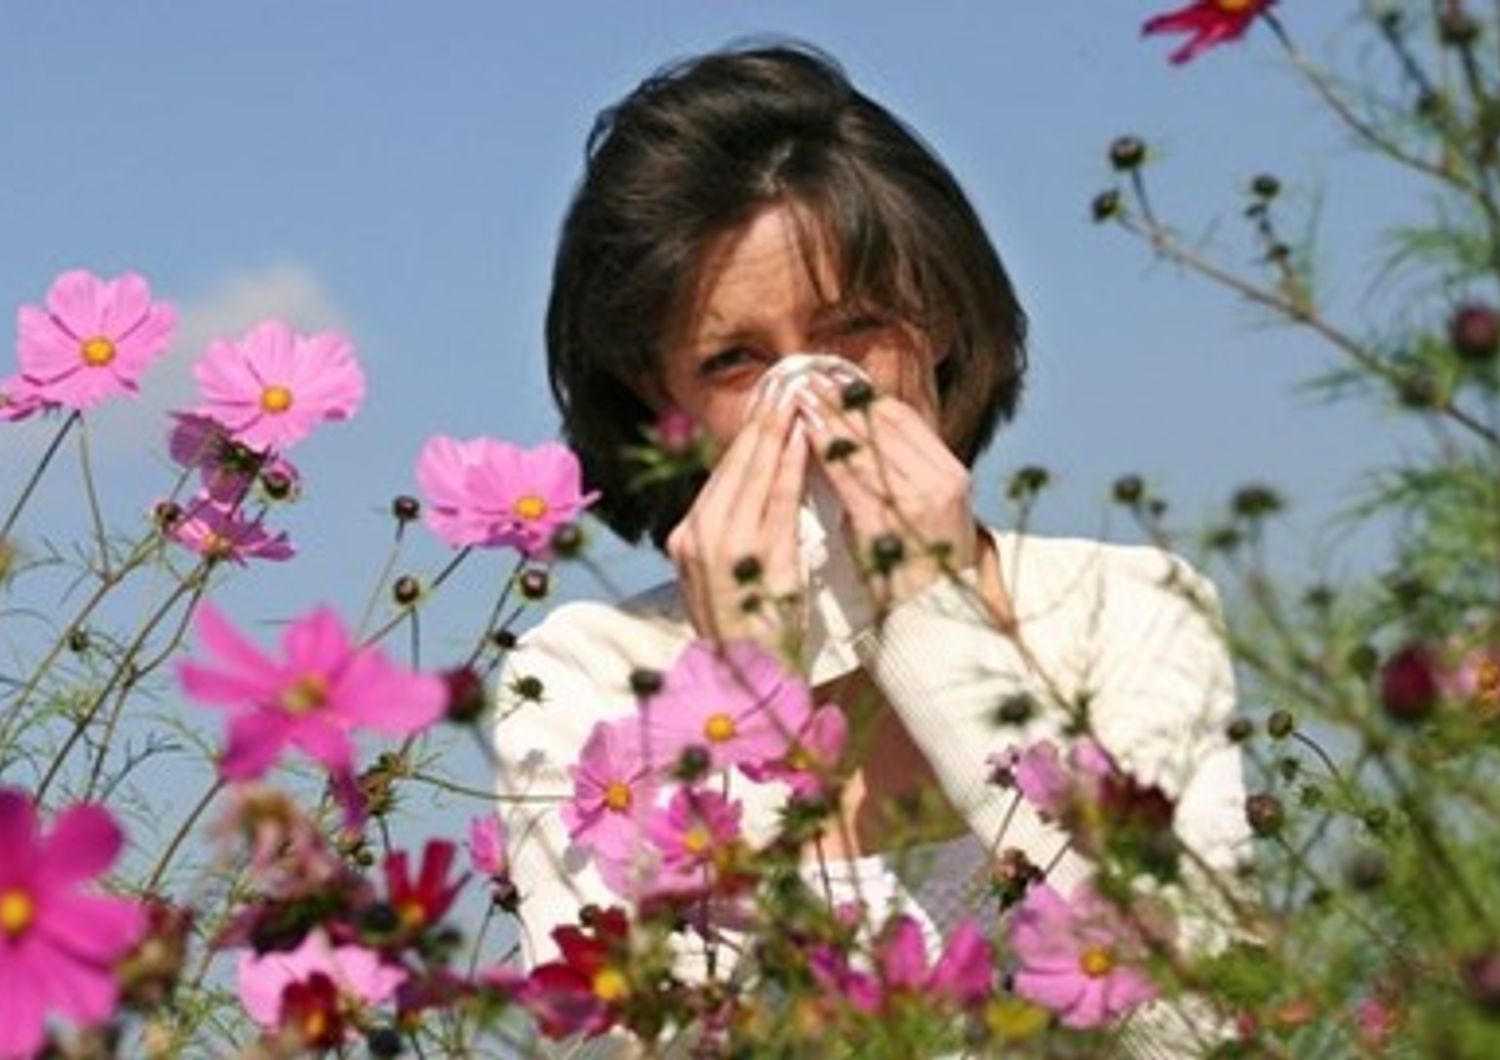 allergia polline raffreddore starnuti.jpg